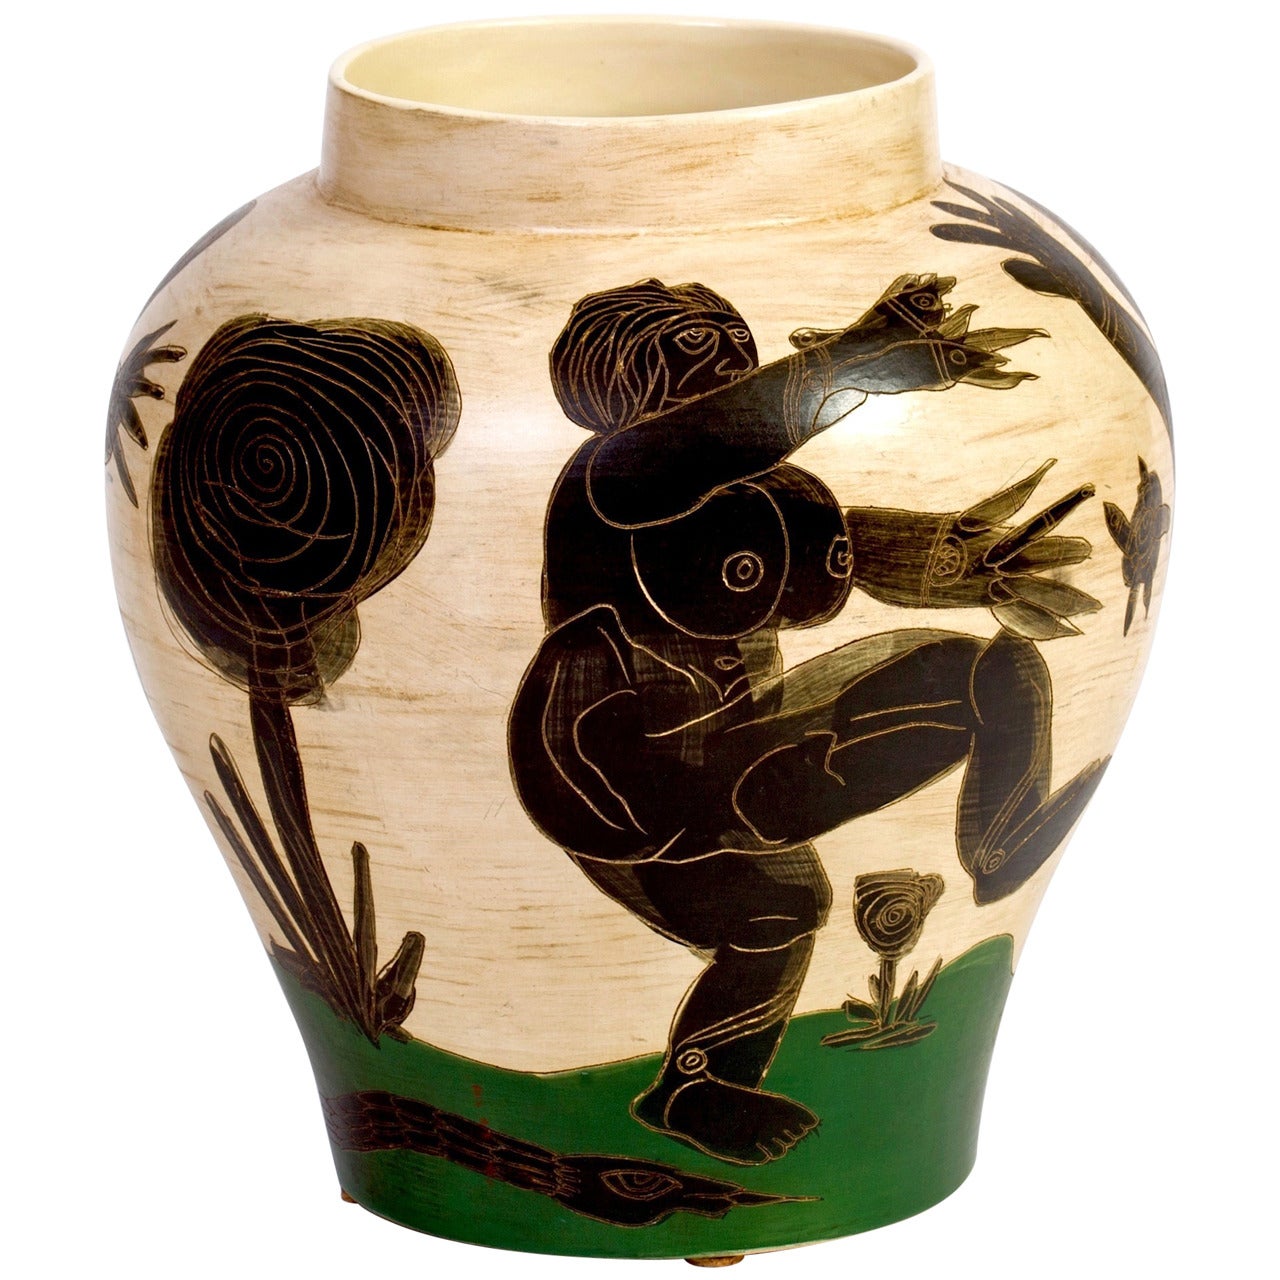 Rare and Early Large Ledesma Ceramic Vase